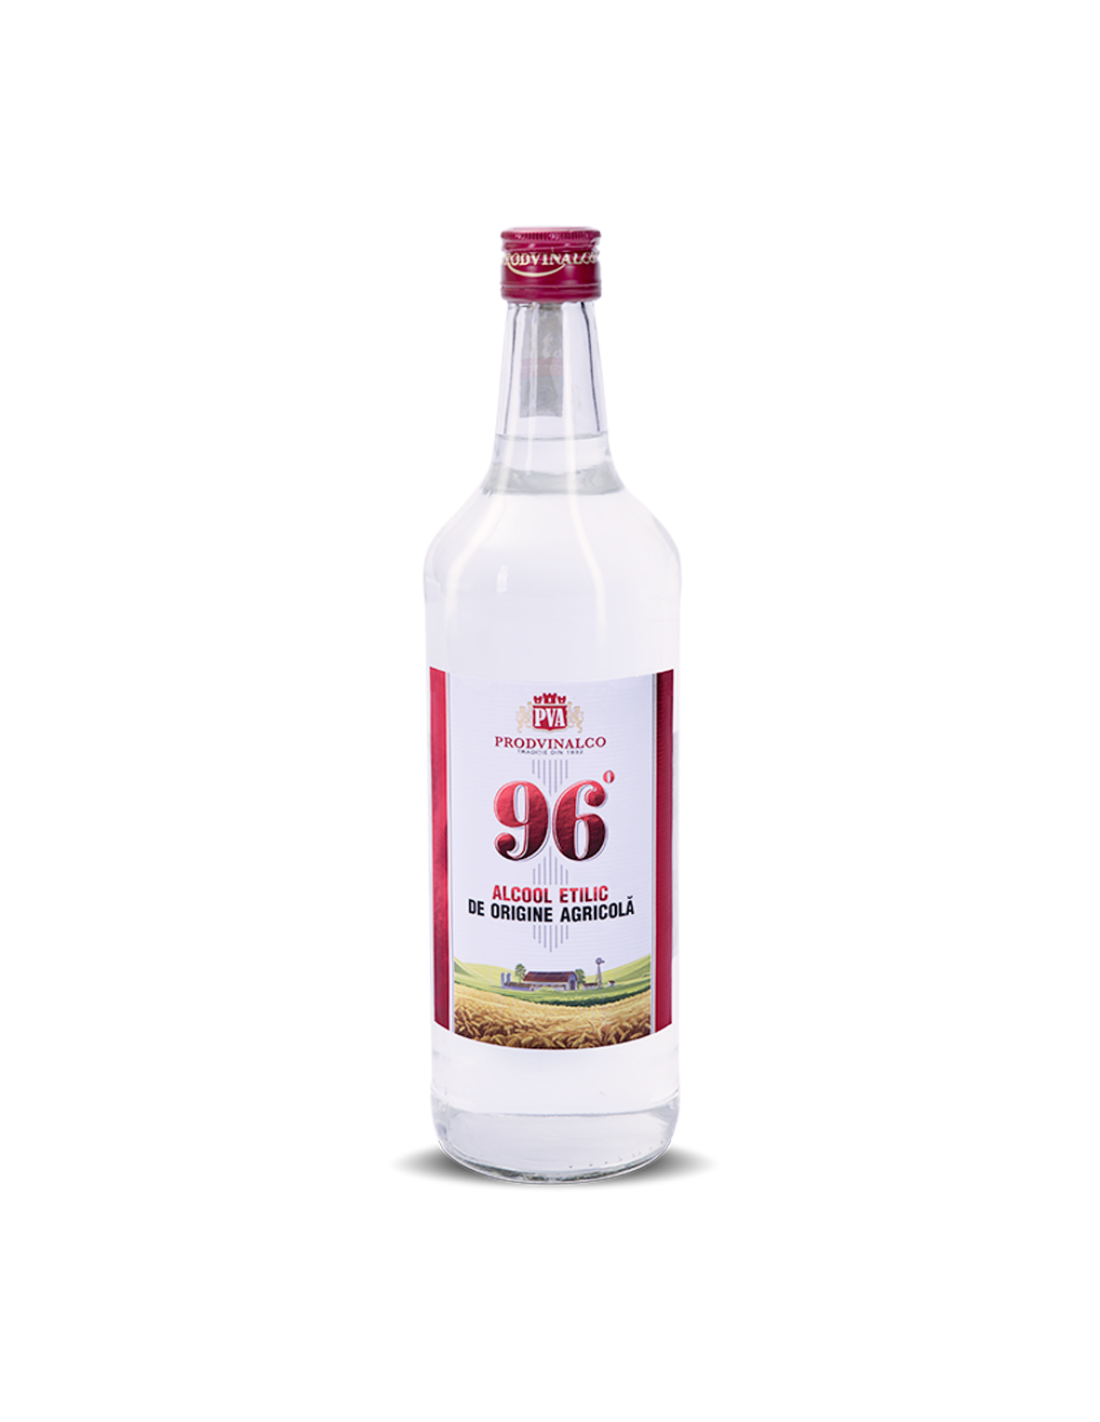 Alcool etilic de origine agricola Prodvinalco, 96% alc., 1L, Romania alcooldiscount.ro